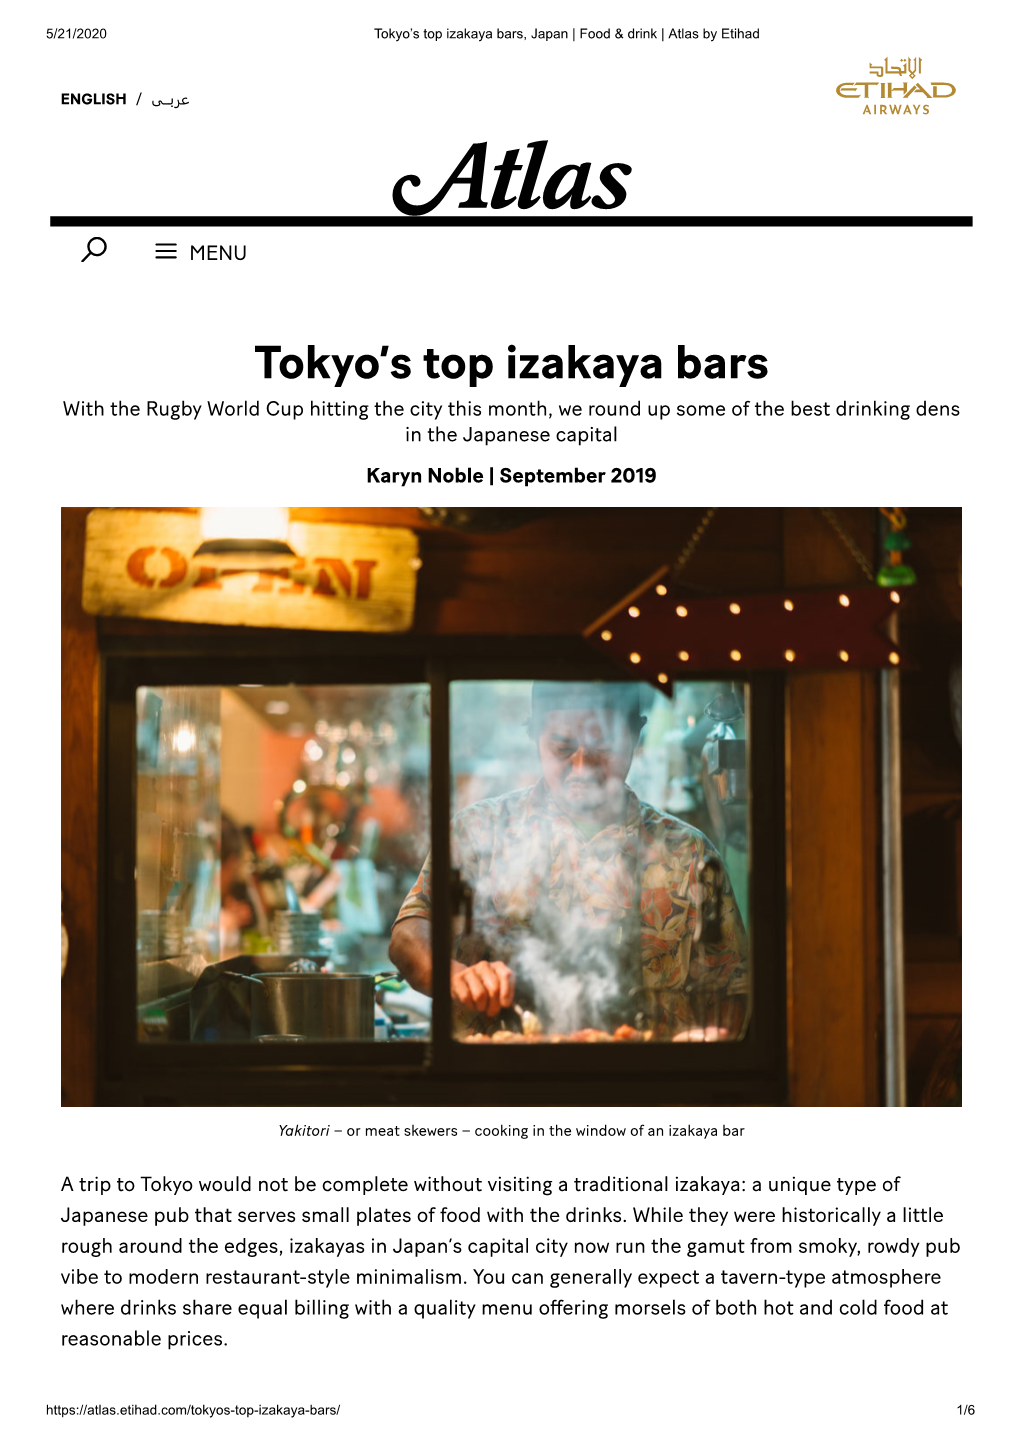 Tokyo's Top Izakaya Bars